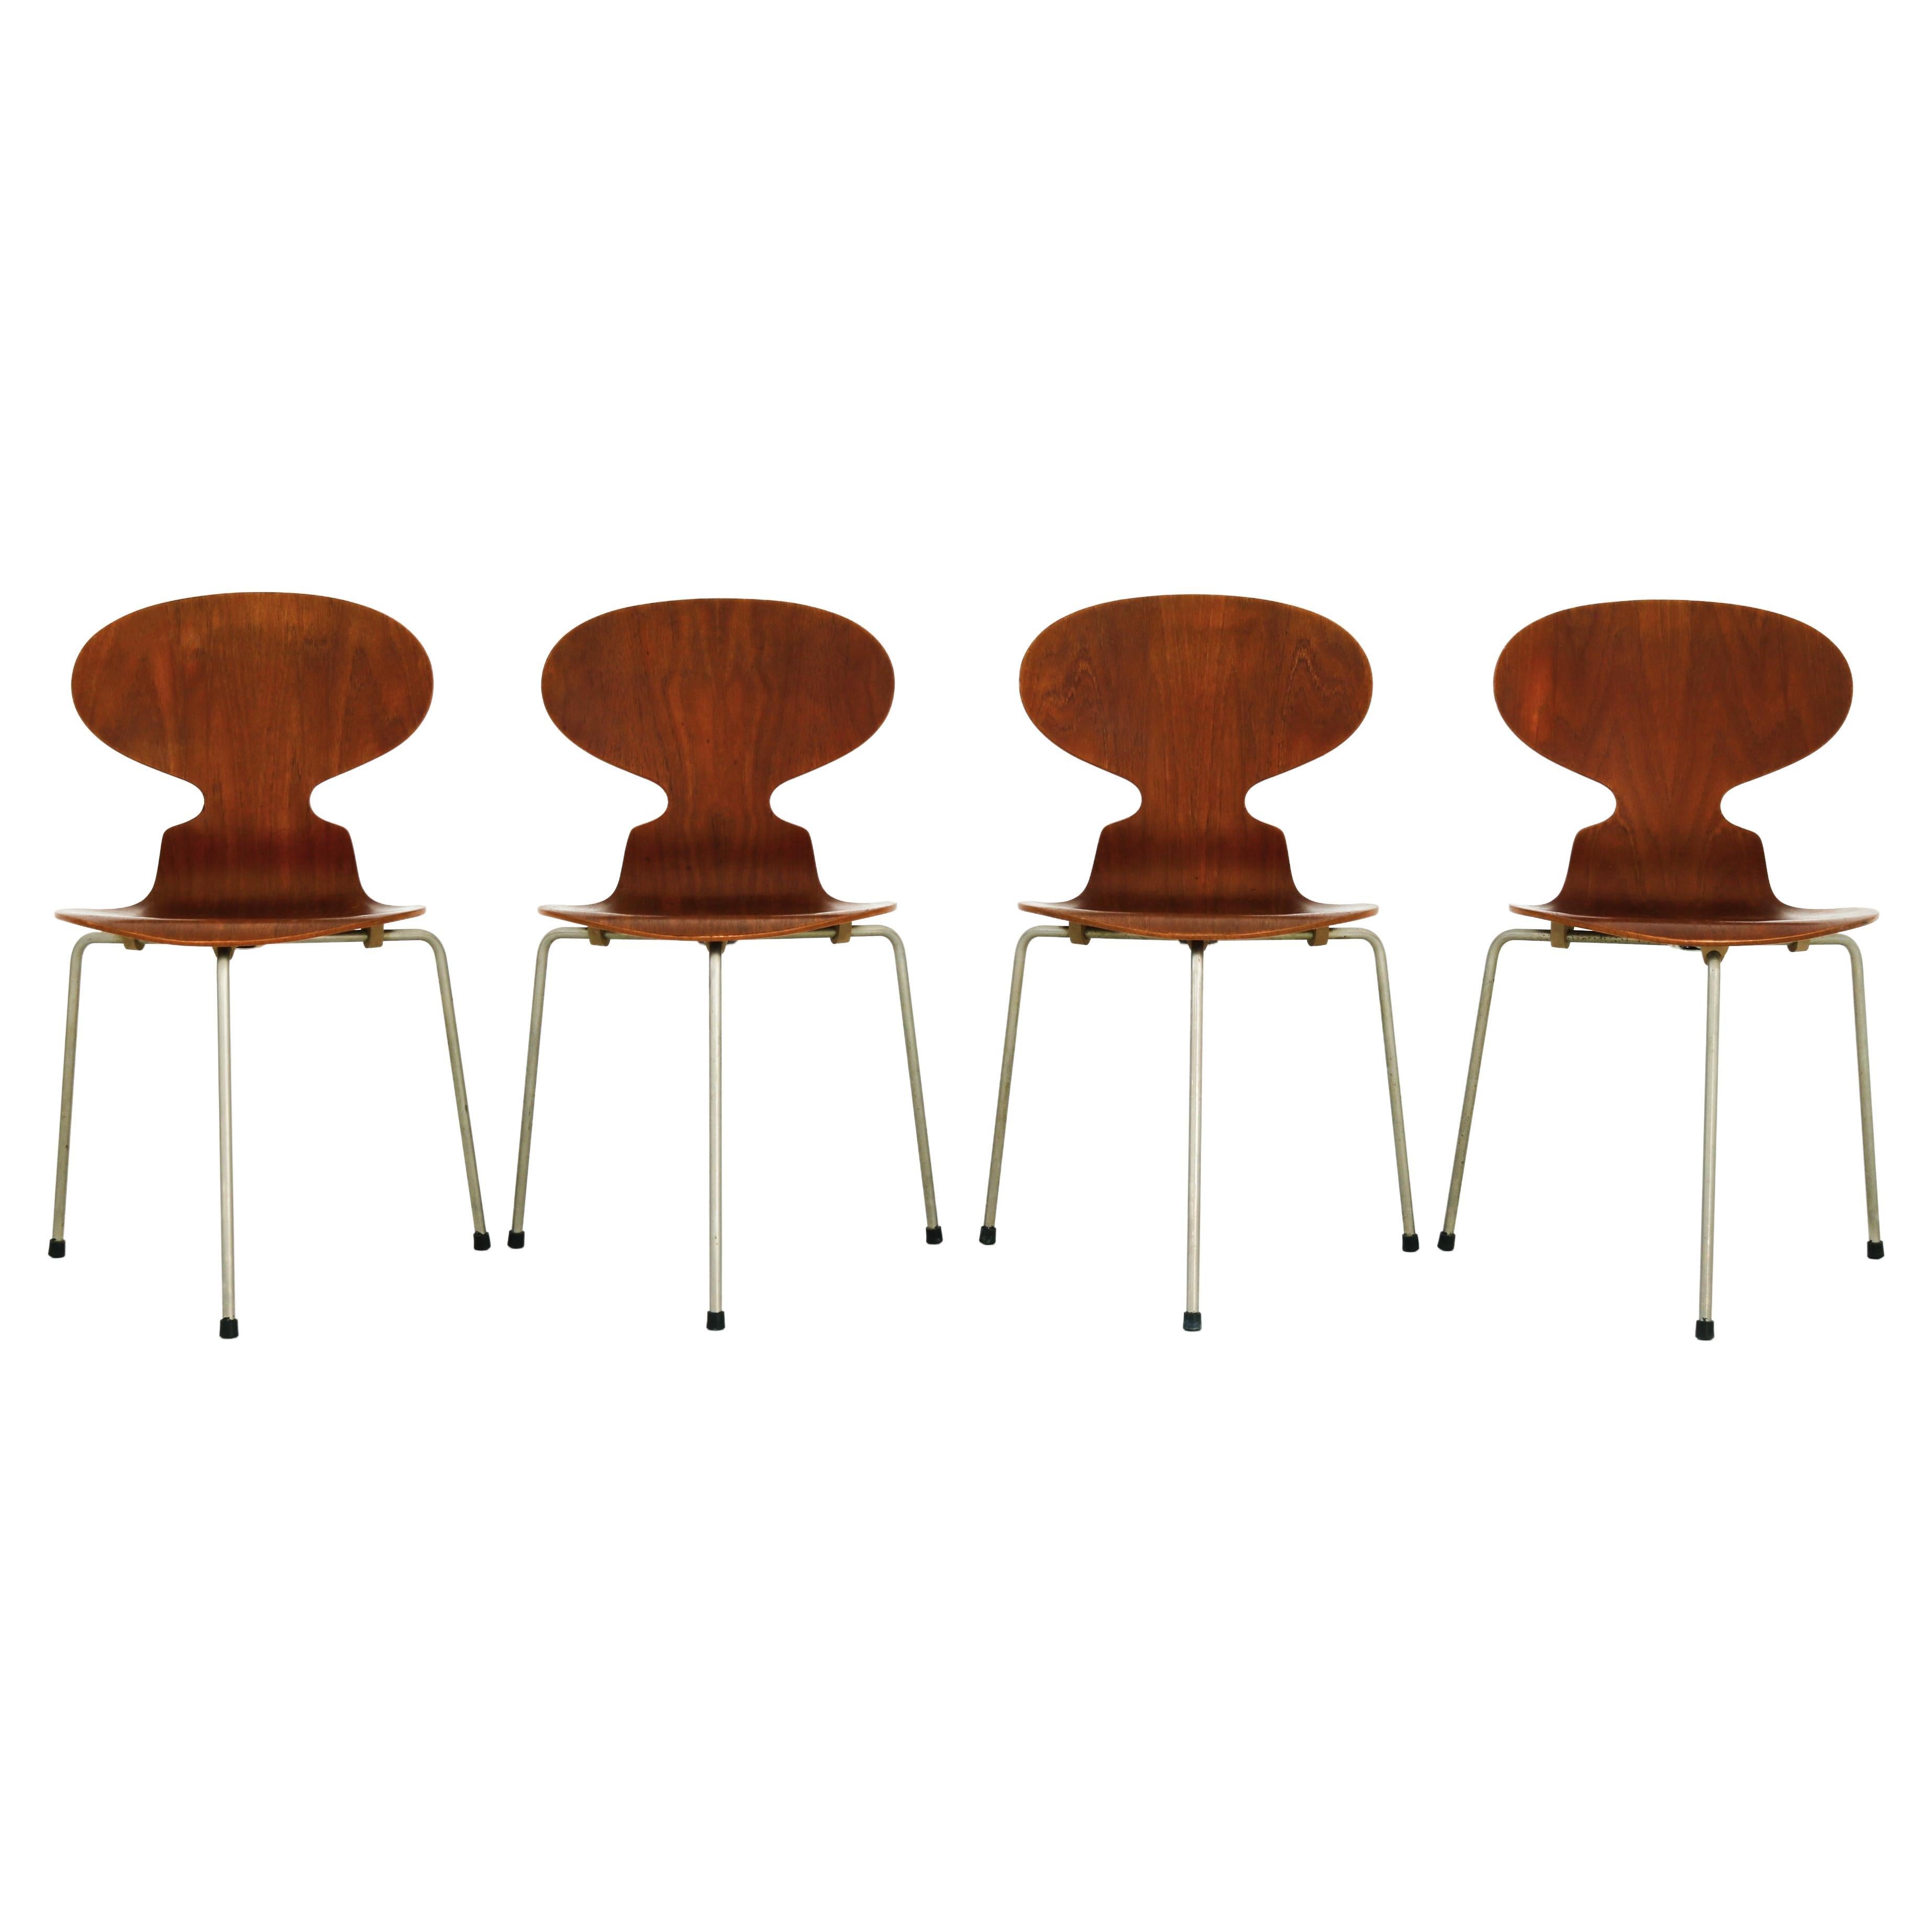 Arne Jacobsen Model 3100 "Ant" Chairs by Fritz Hansen Teak Wood & Steel, 1950s For Sale